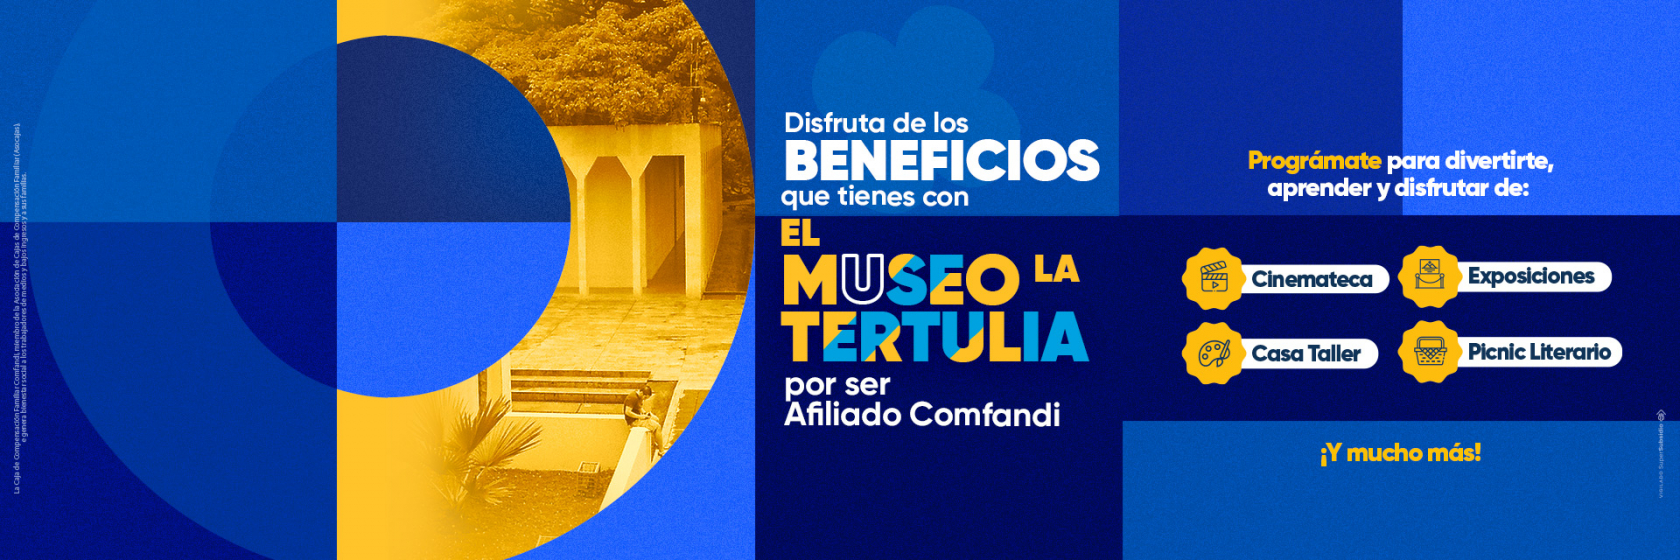 Alianza Comfandi y Museo la Tertulia